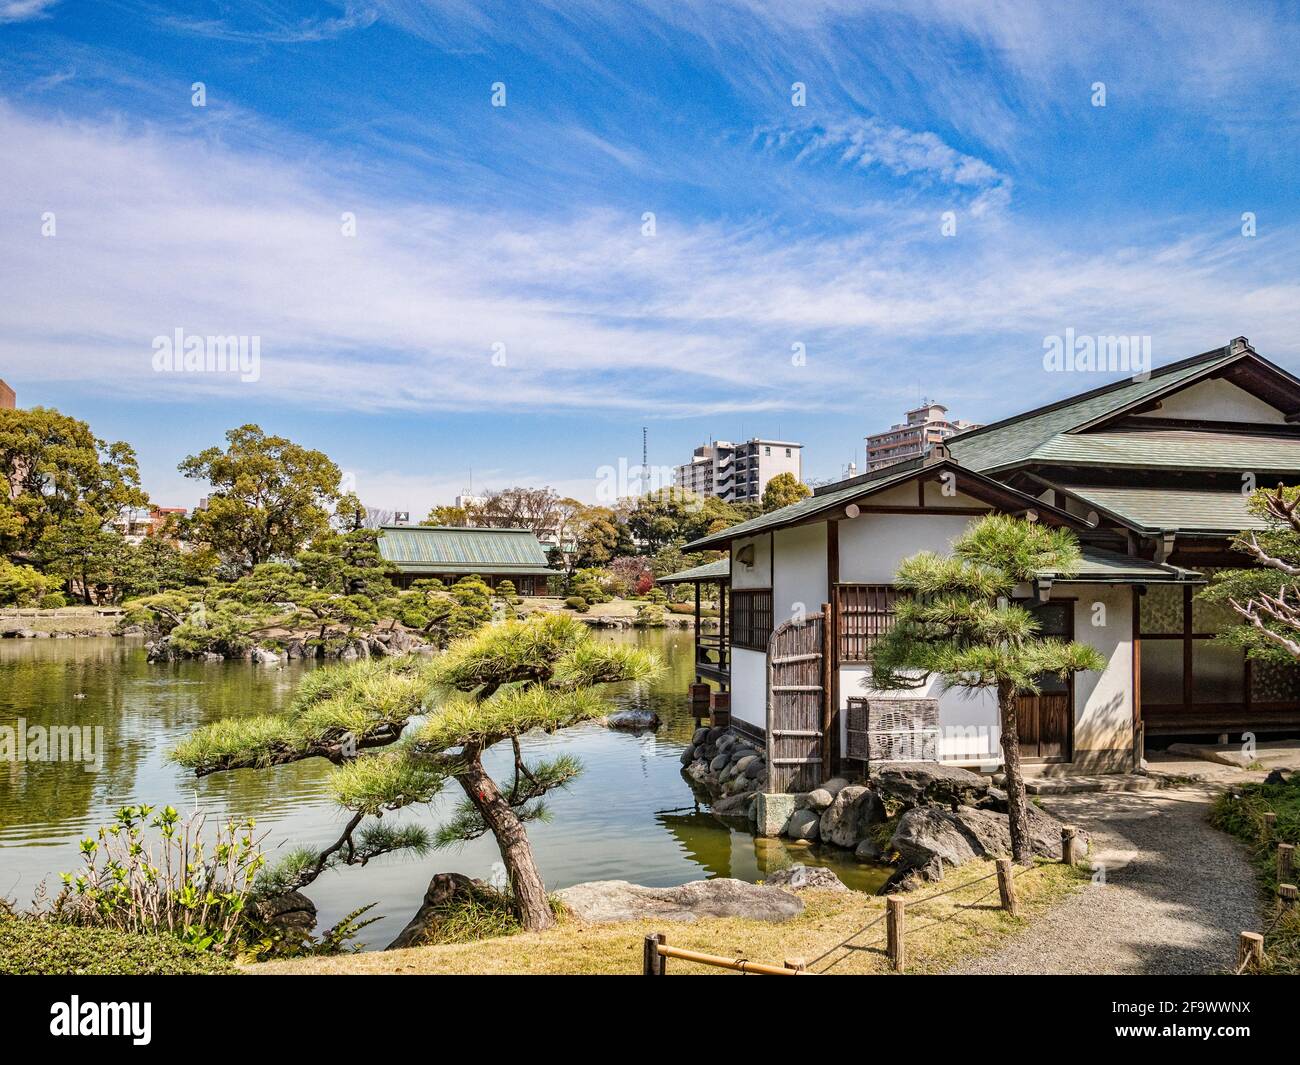 5 April 2019: Tokyo, Japan - Lake and pavilion in Kyu-Shiba-rikyu Gardens, a traditional style landscape garden in central Tokyo. Stock Photo